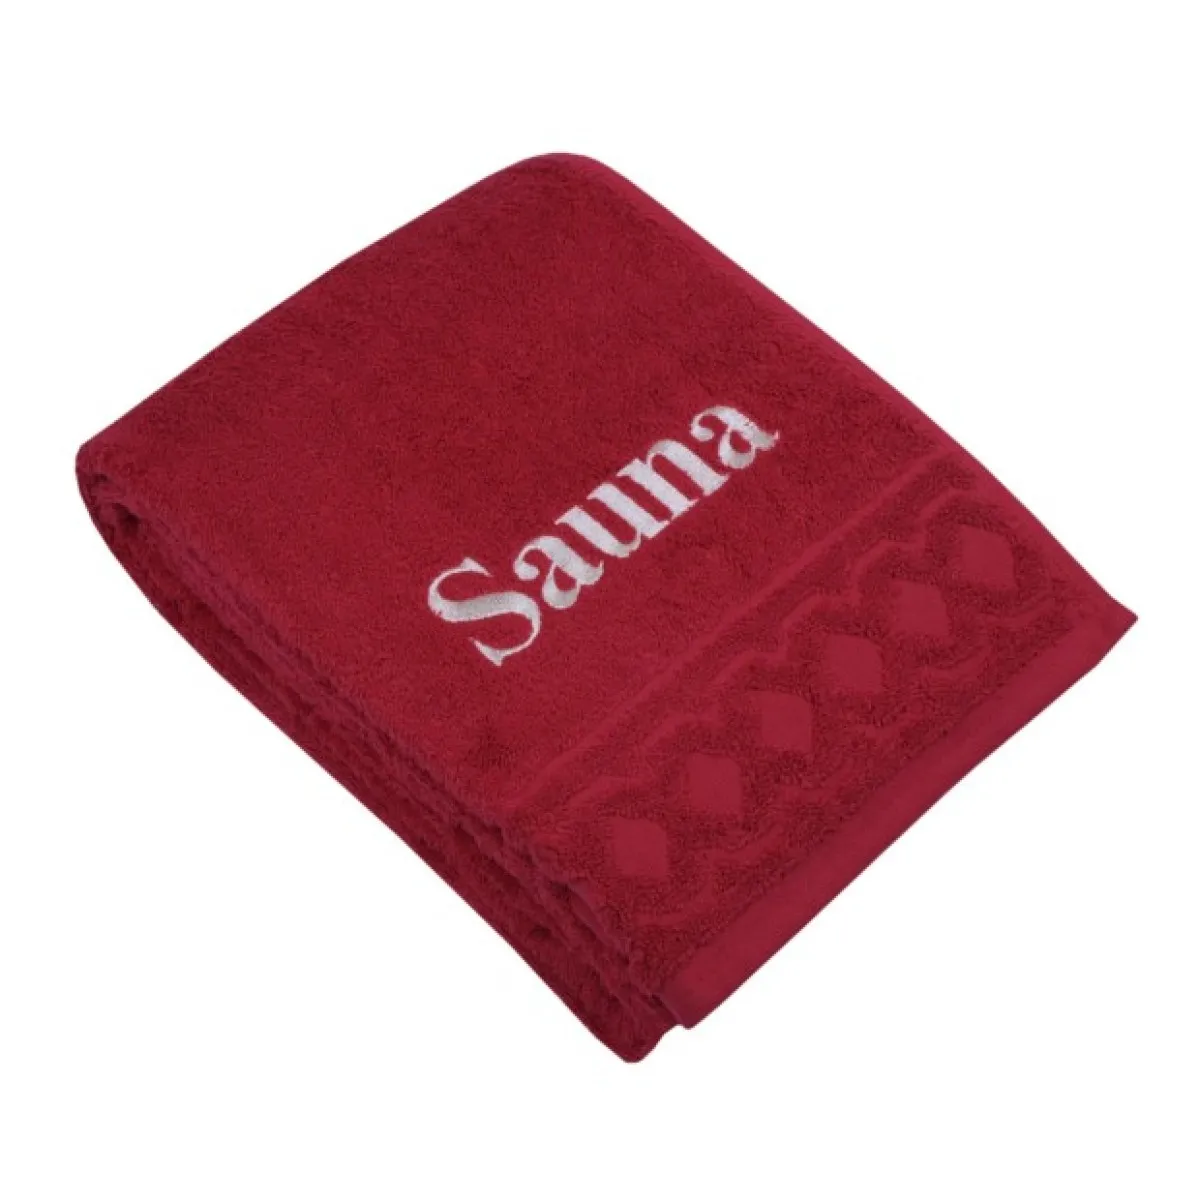 Jacquard R sauna towel wine red embroidered with sauna